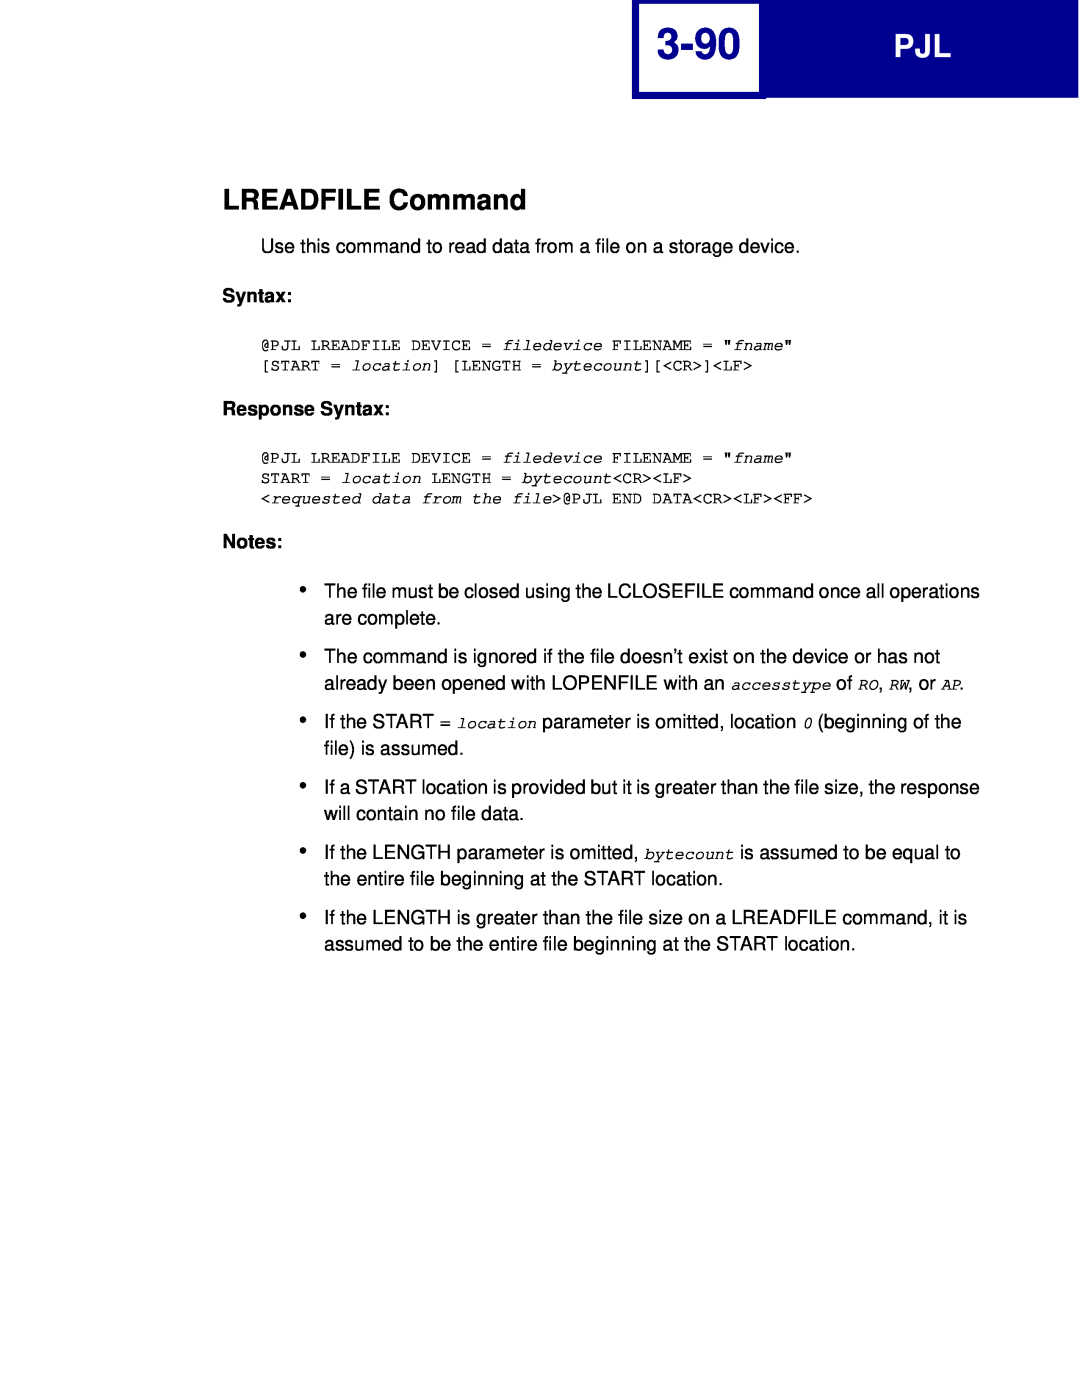 Lexmark C762, C760 manual 3-90, LREADFILE Command, Response Syntax 